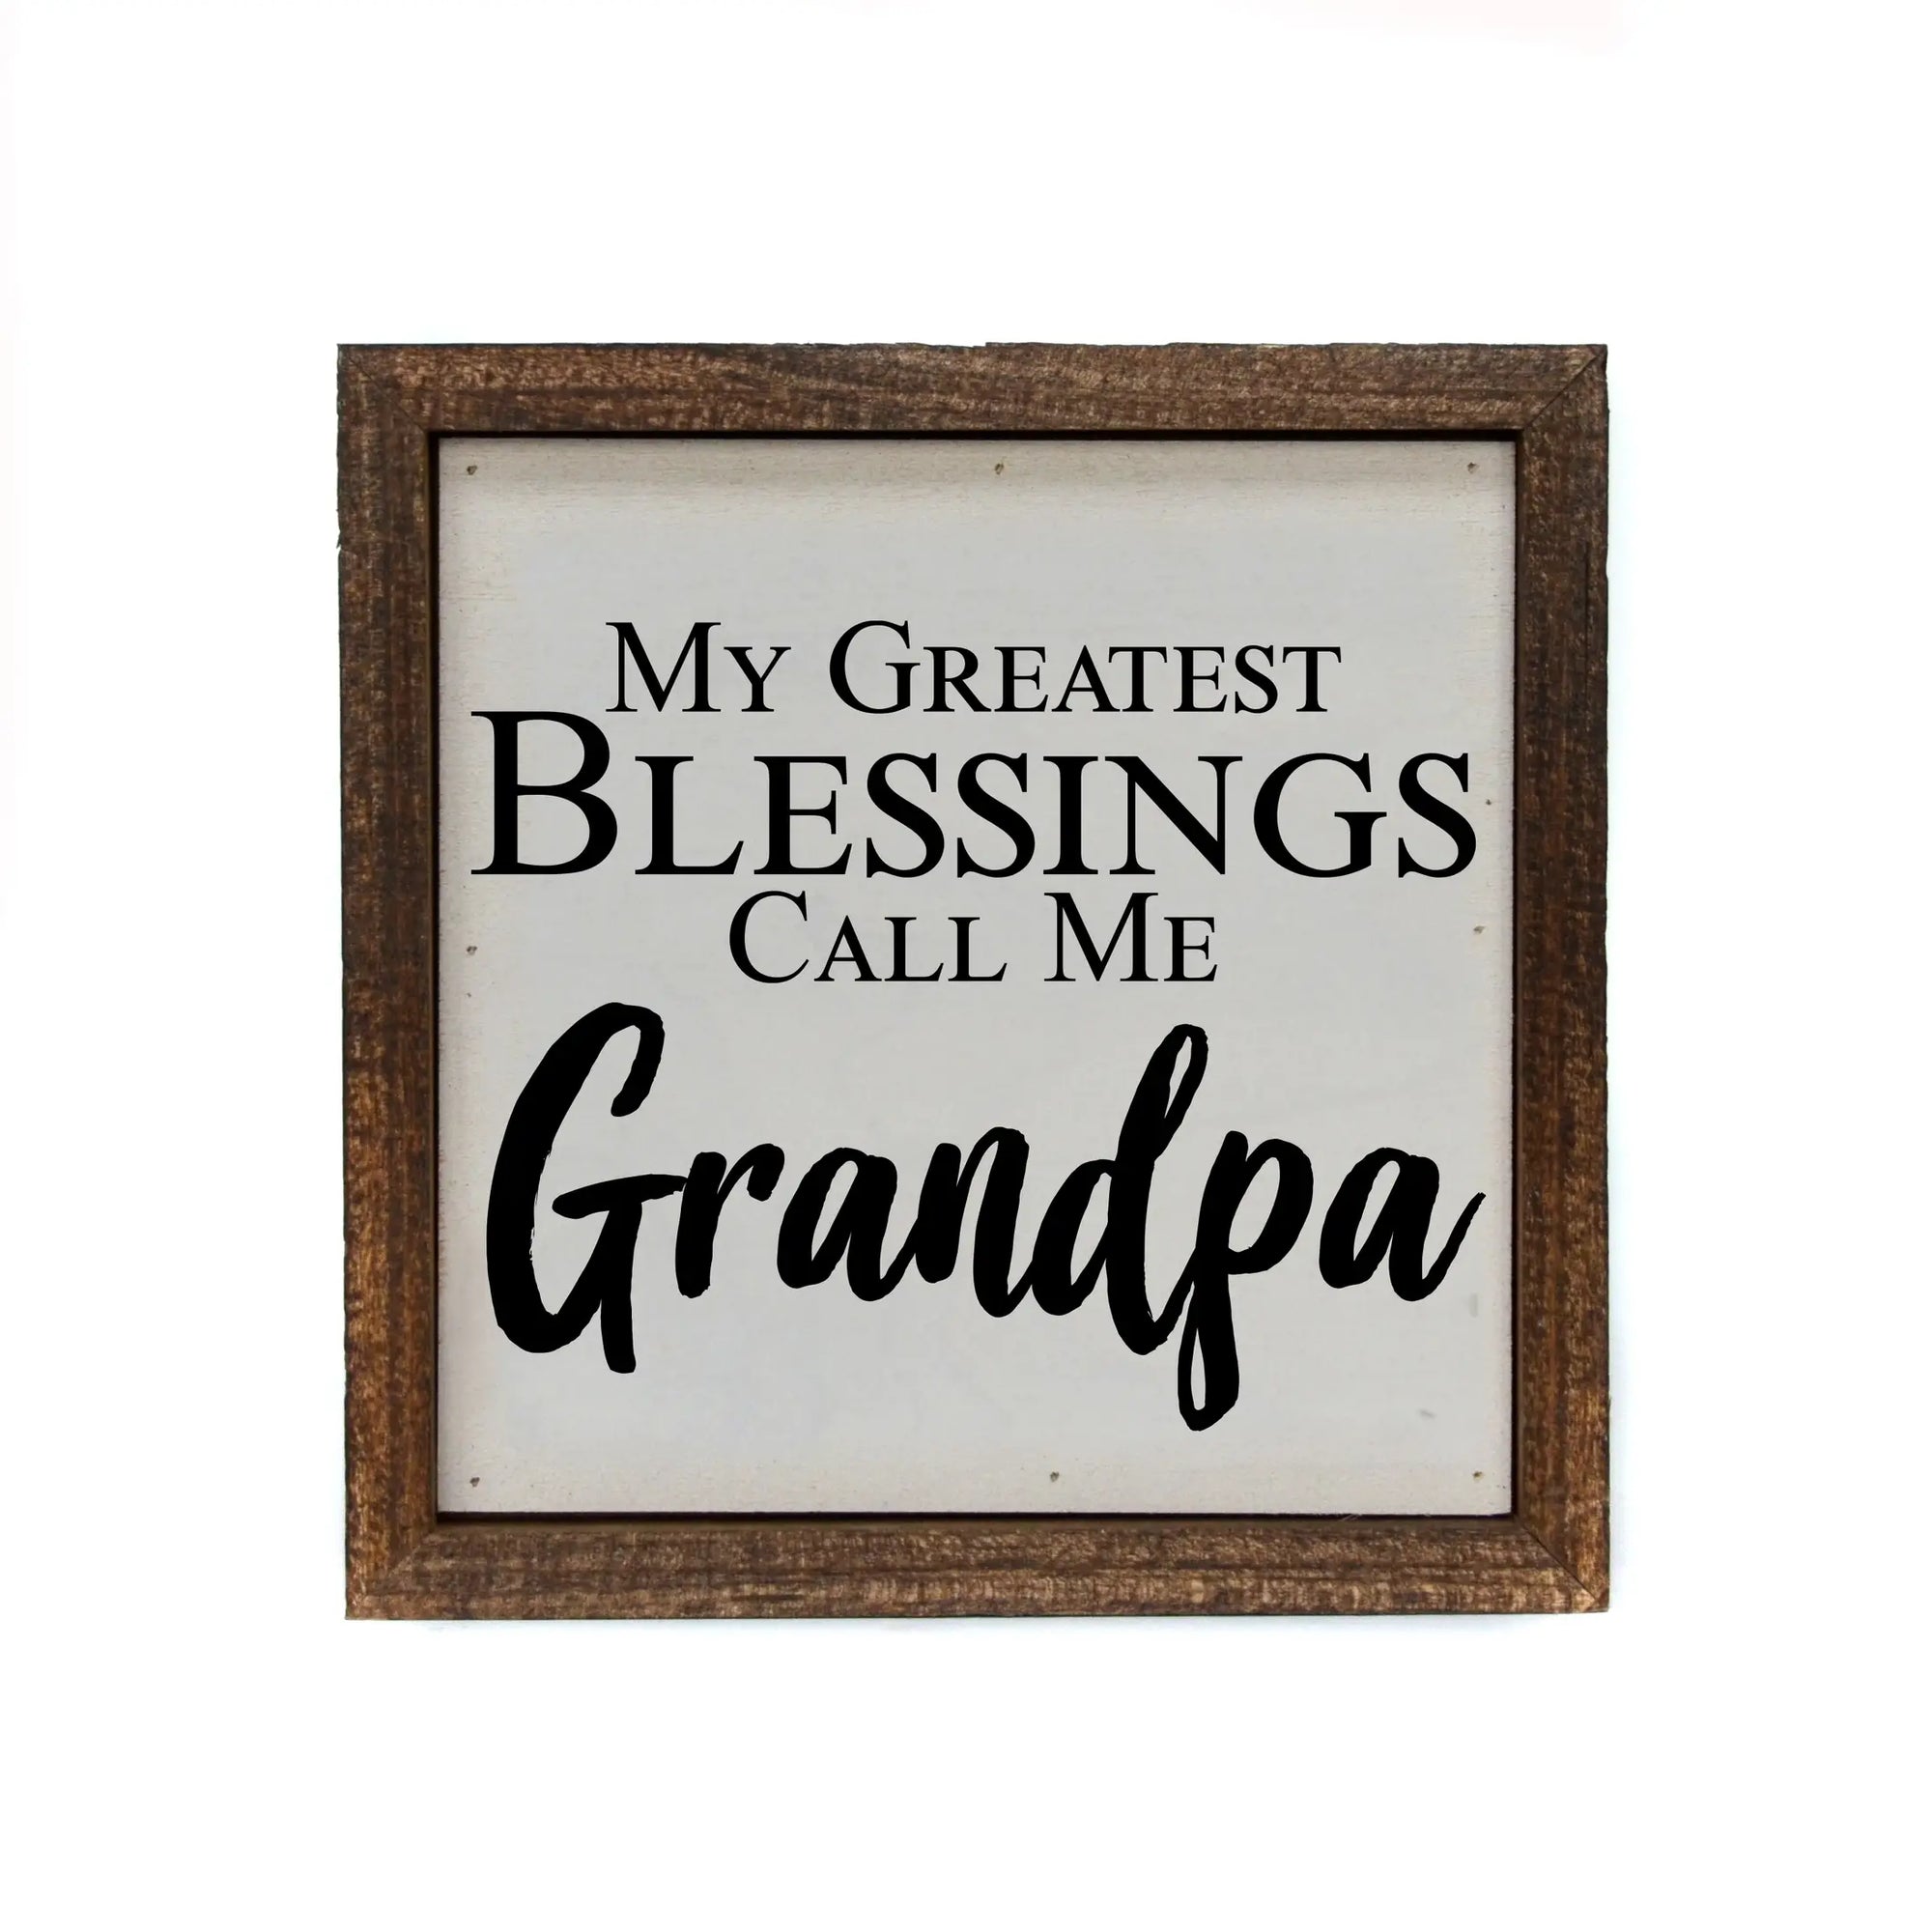 Call Me Grandpa Framed Sign